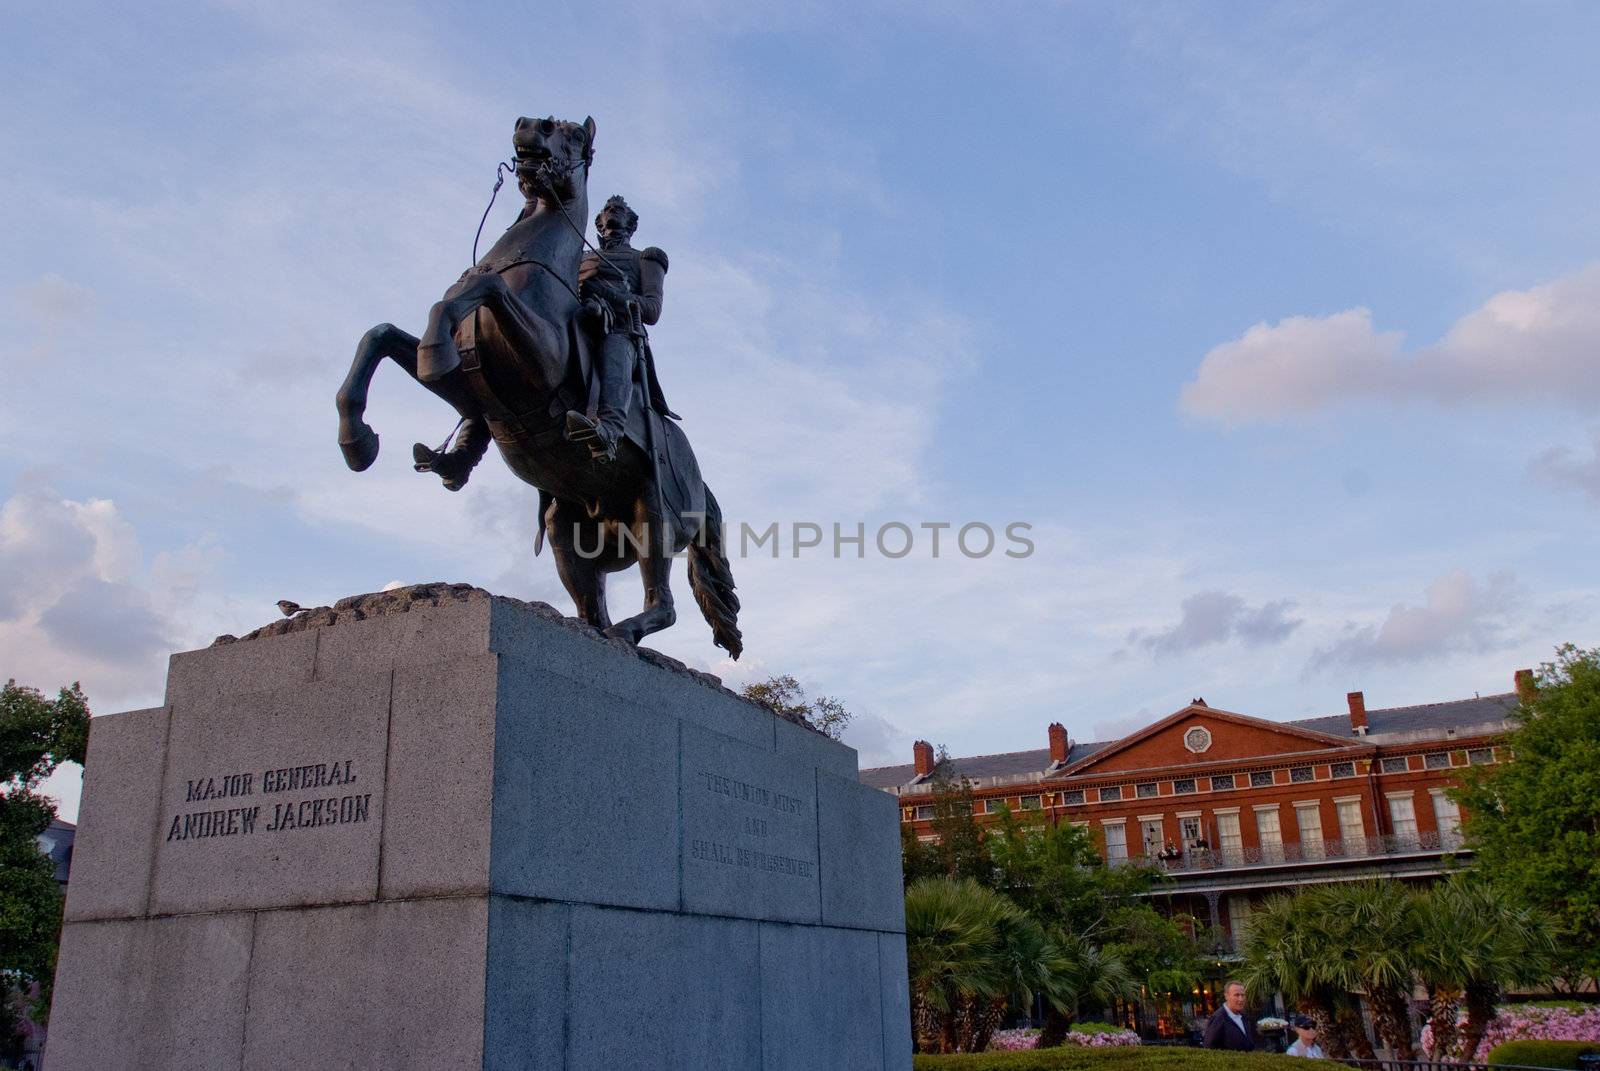 Andrew Jackson statue and Pontalba Apartments, New Orleans